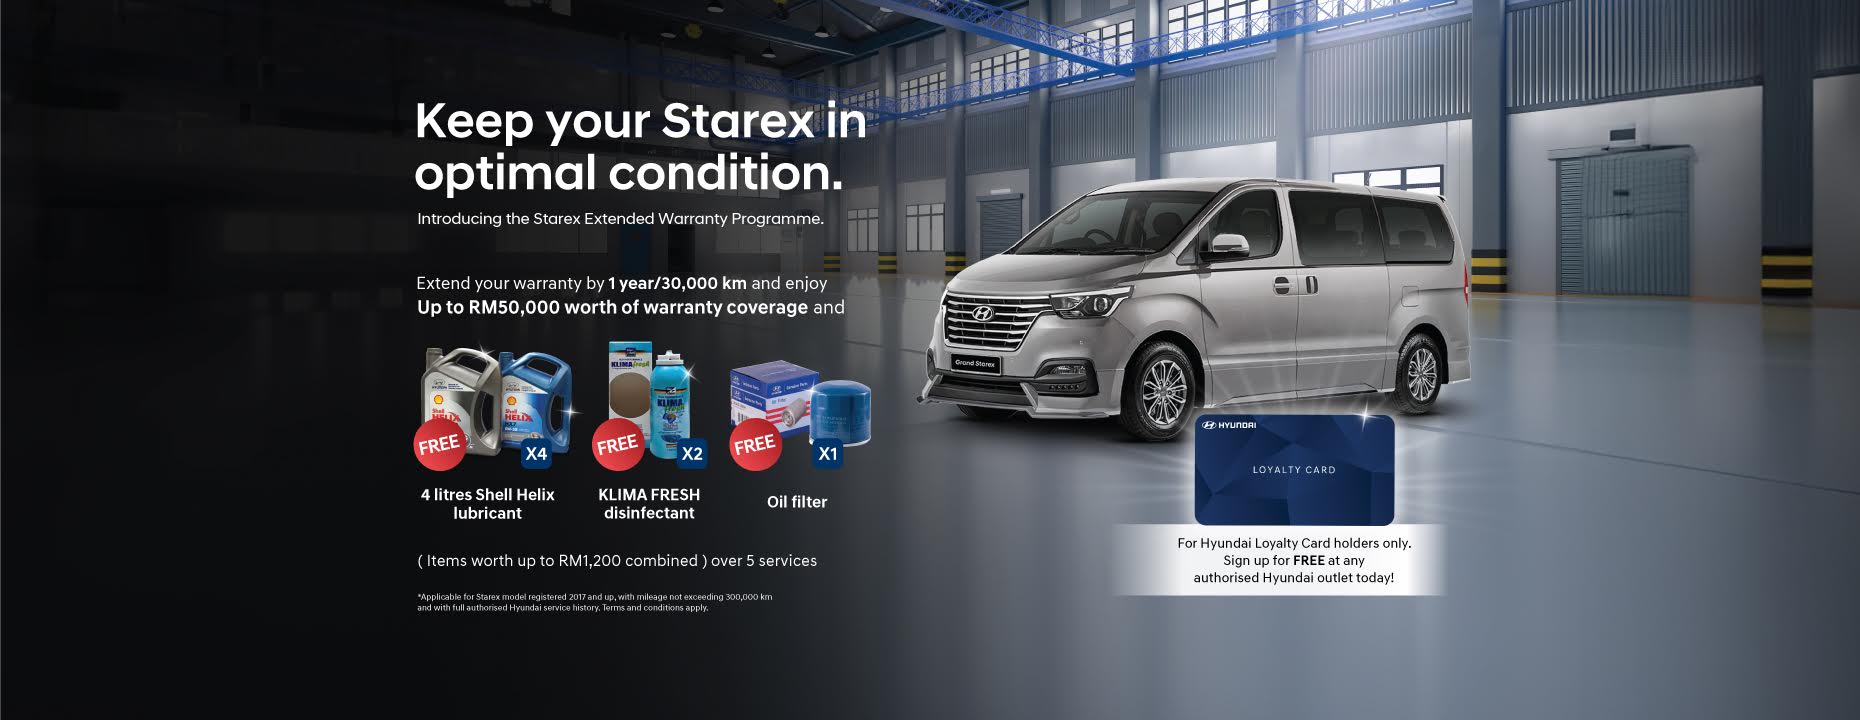 Hyundai Starex Promotion